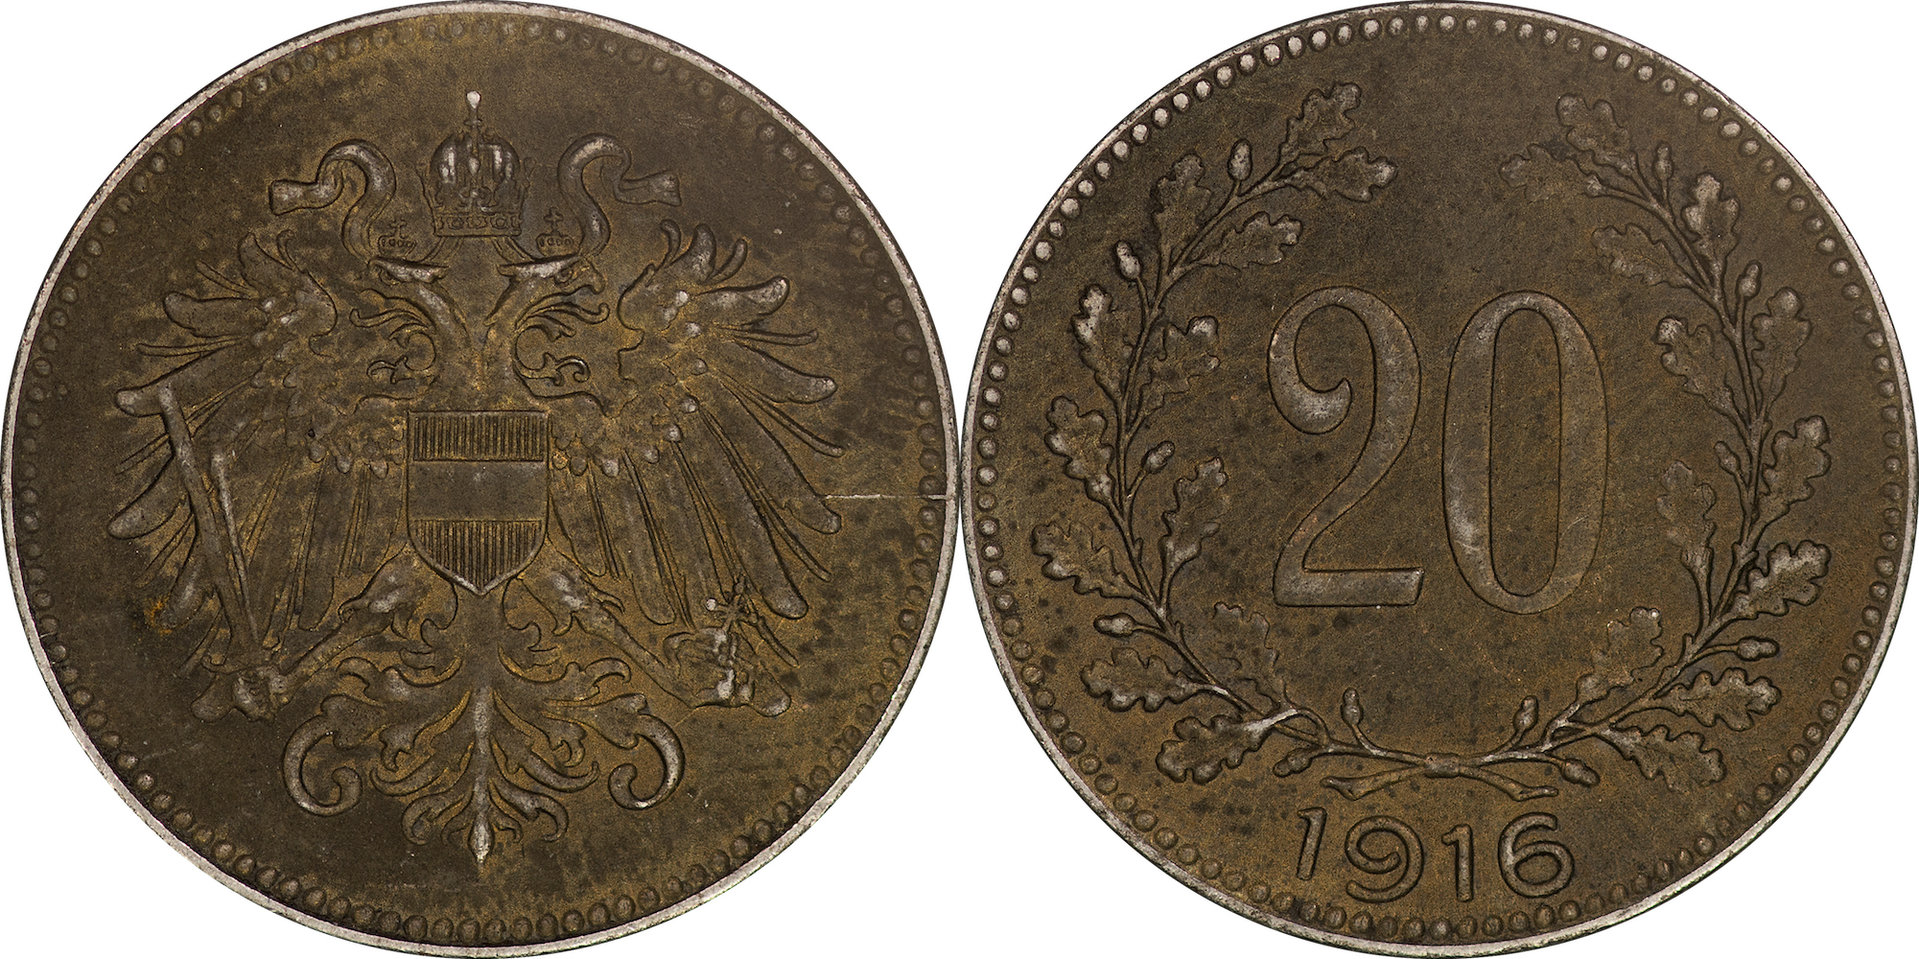 Austria - 1916 20 Heller.jpg